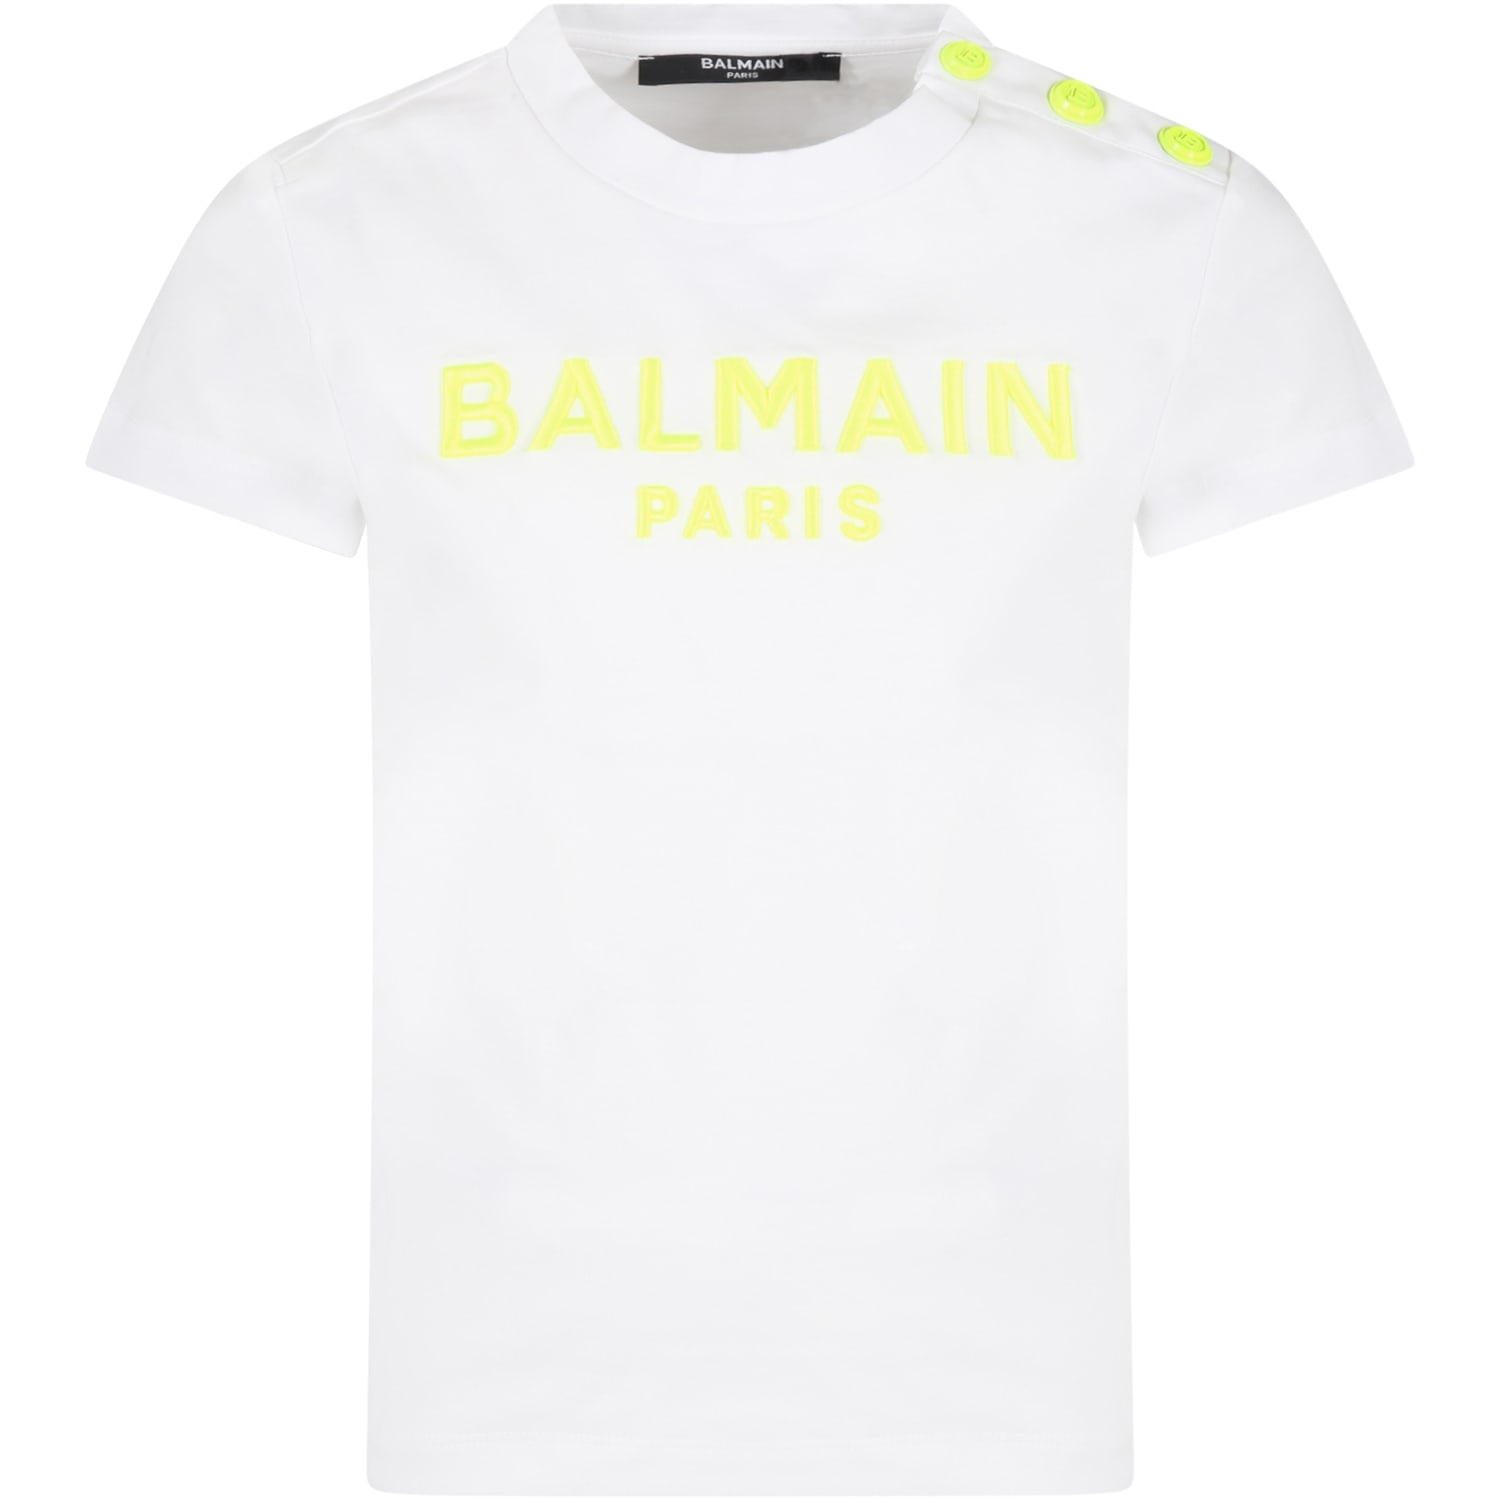 Balmain White T-shirt For Kids With Neon Yellow Logo